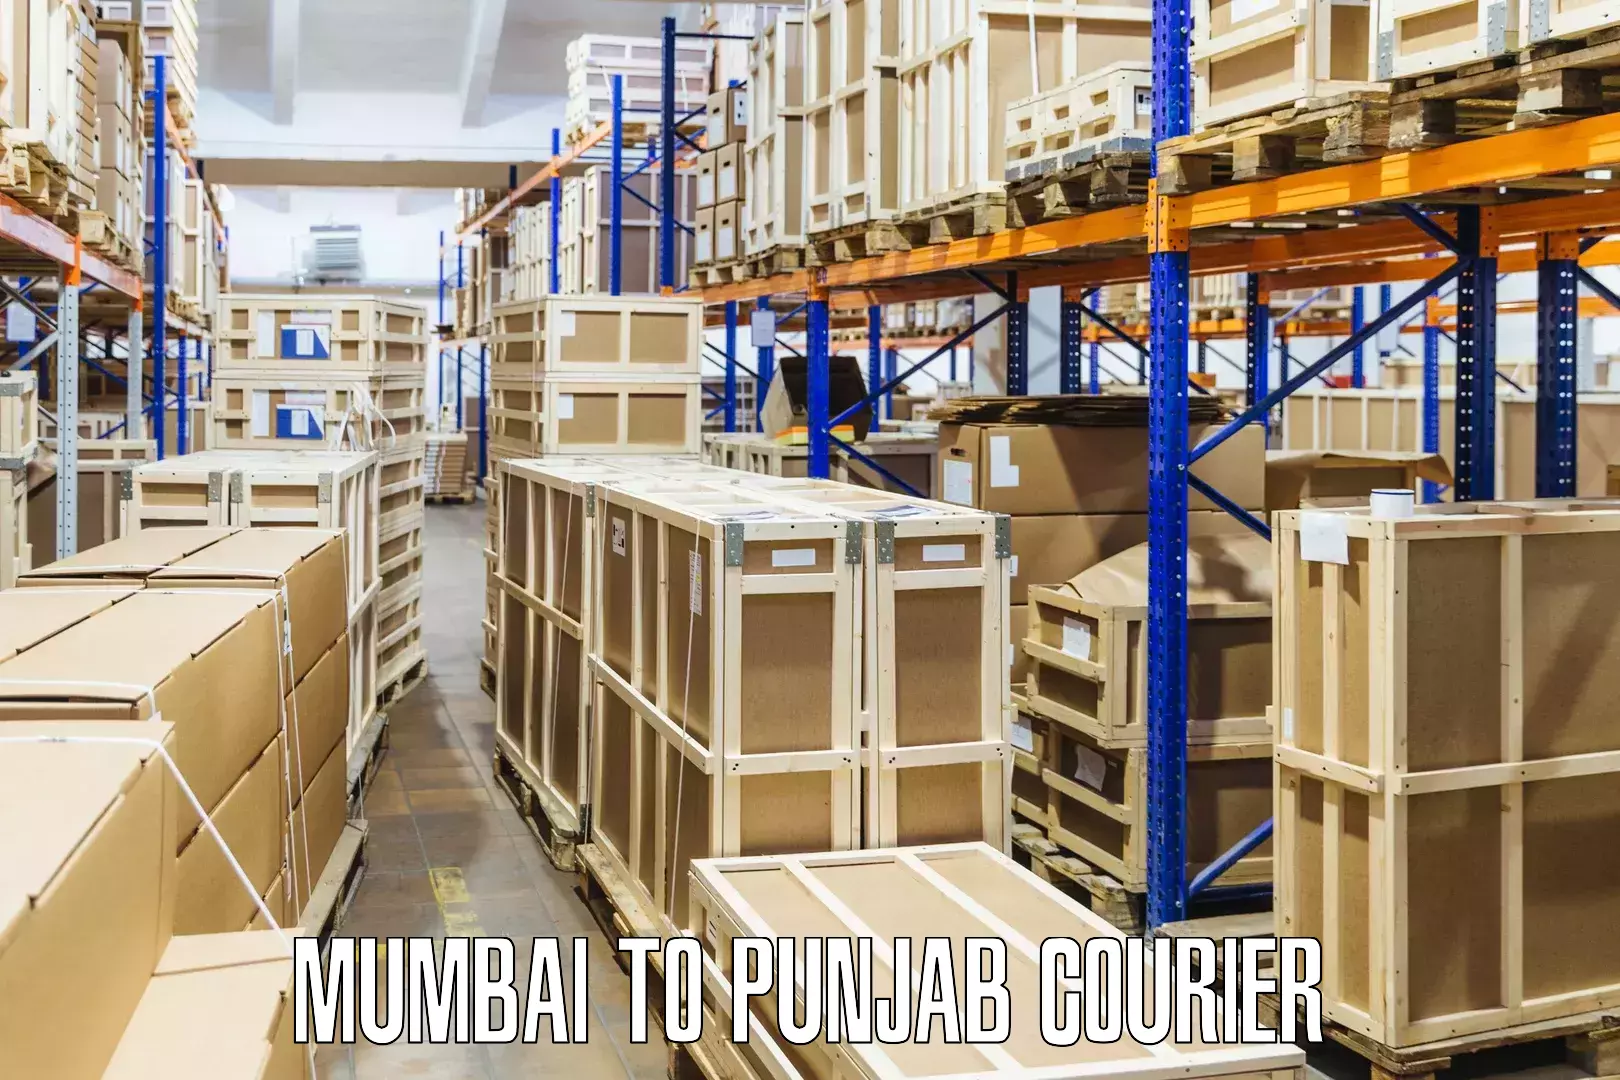 Residential courier service Mumbai to Punjab